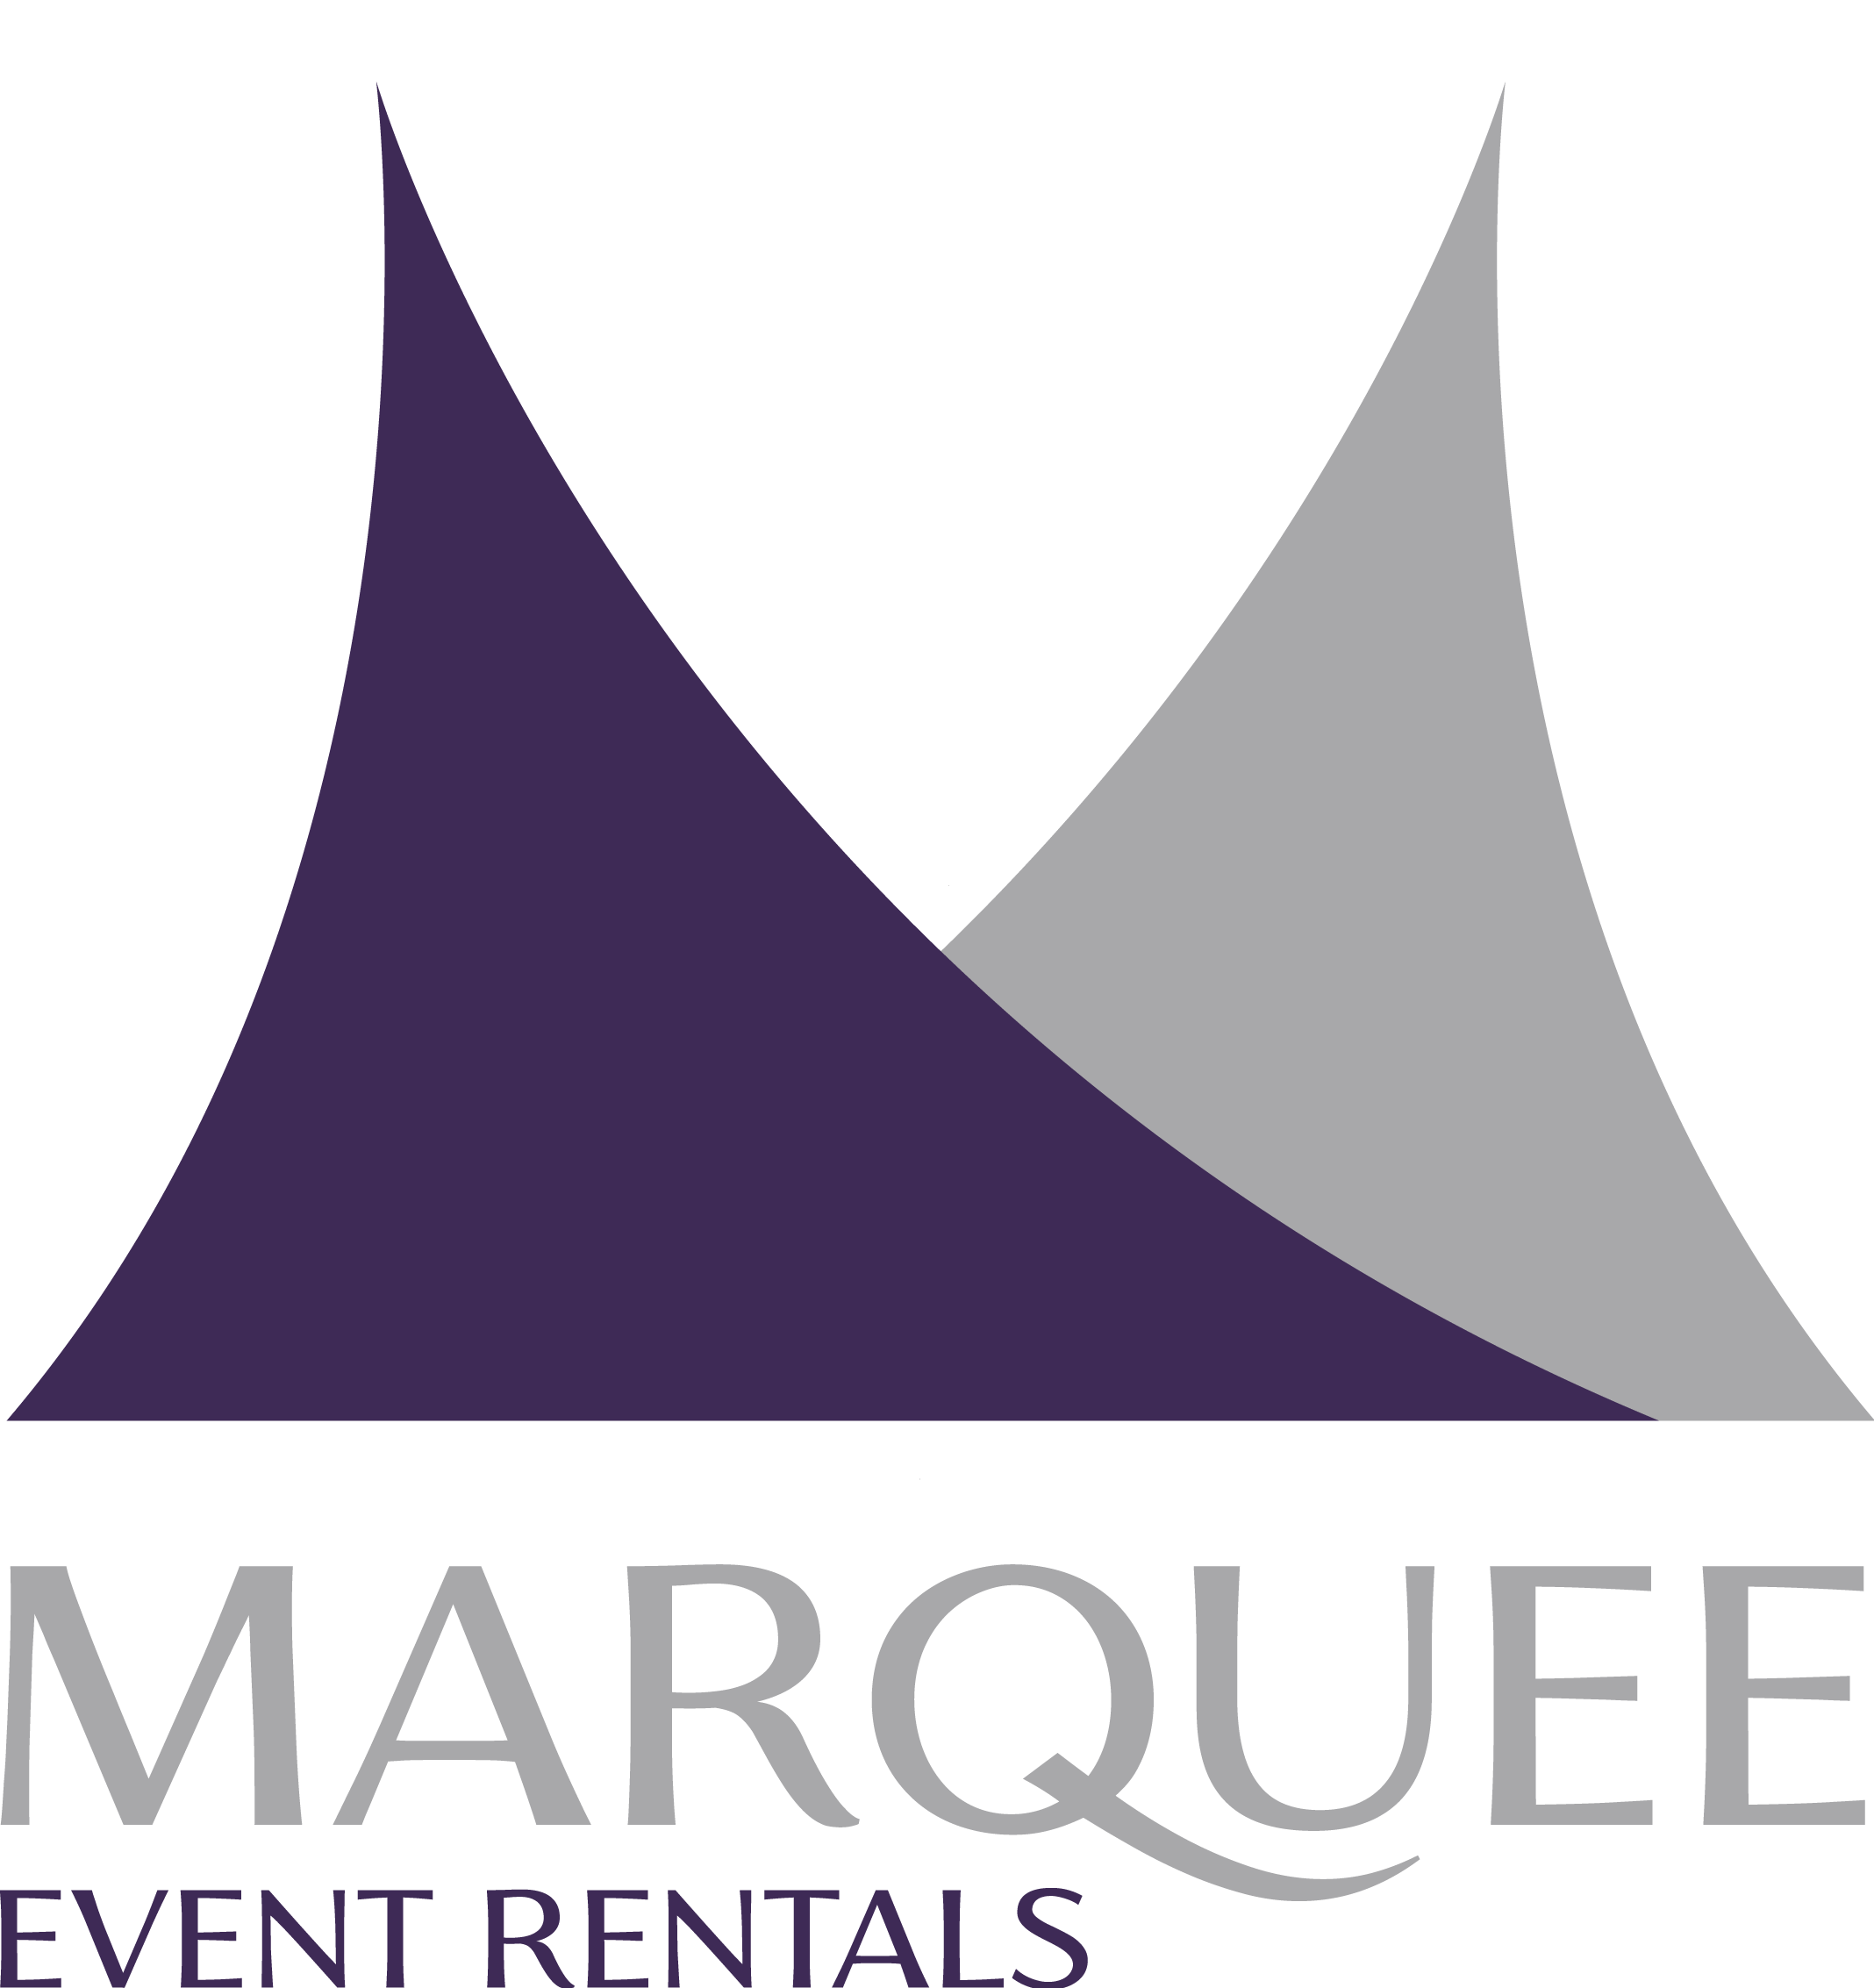 Marquee Logo - Marquee Event Rentals Logo. Powell Gardens, Kansas City's botanical